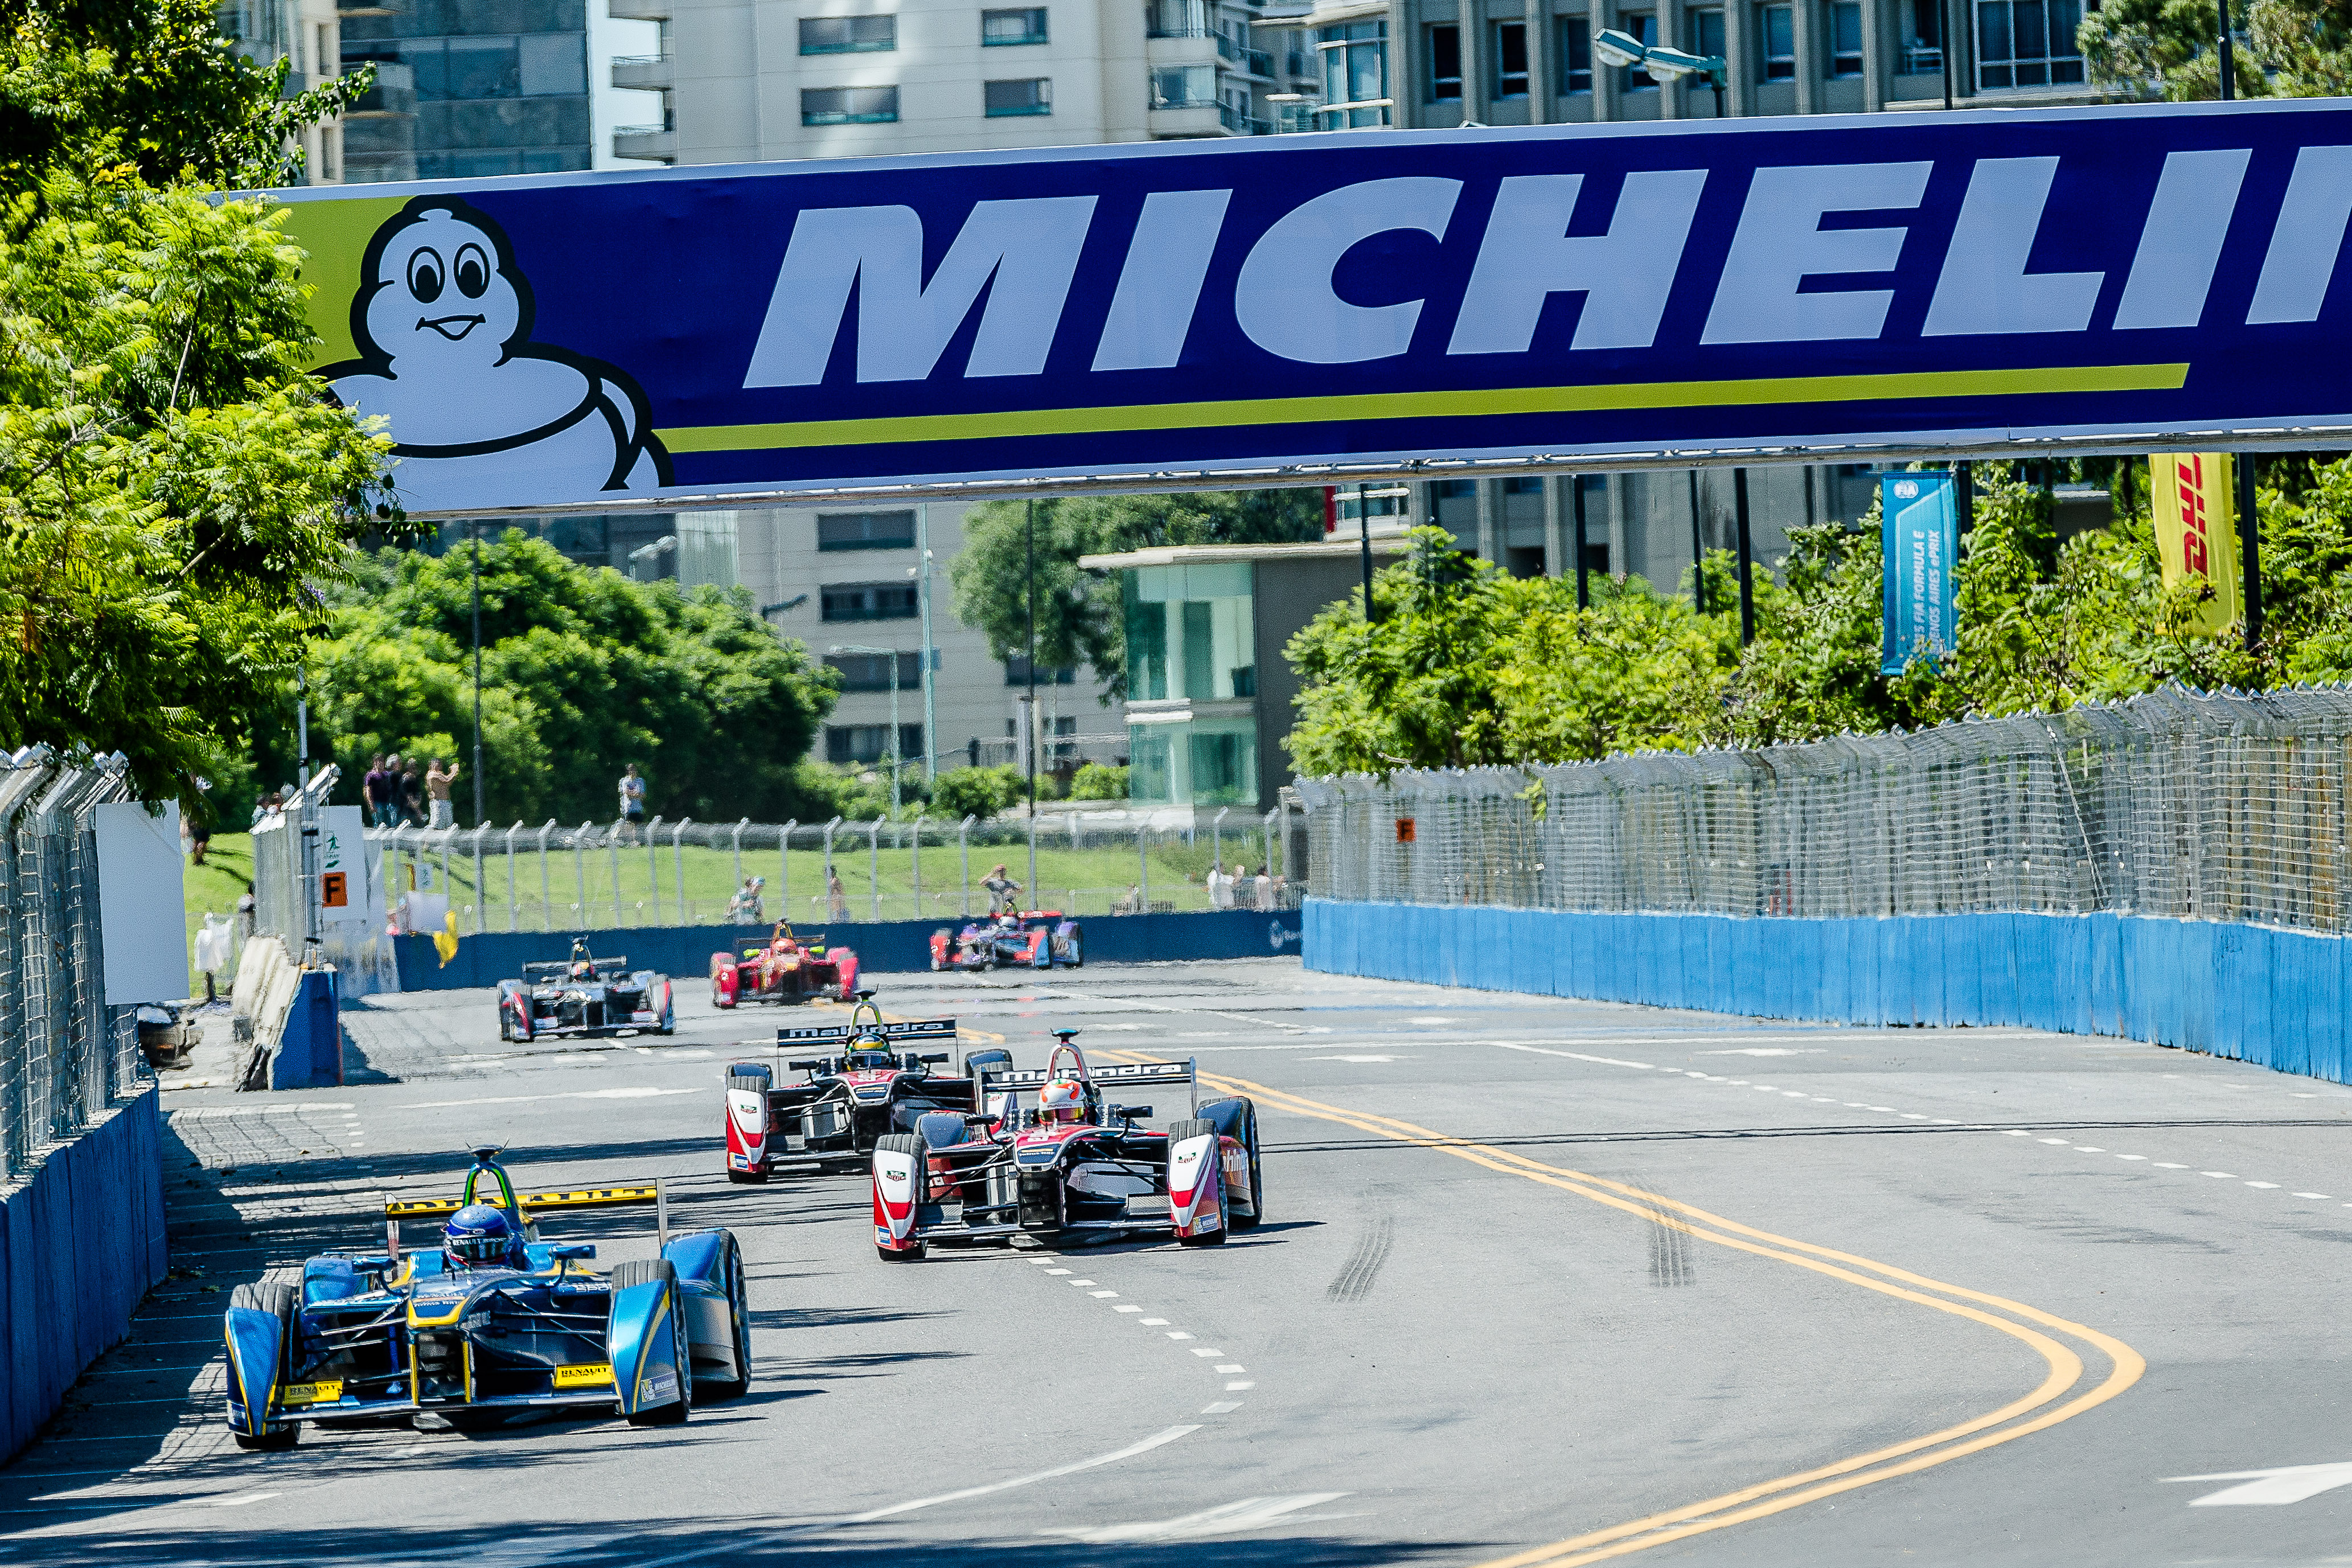 Michelin testea sus neumáticos en la Fórmula E